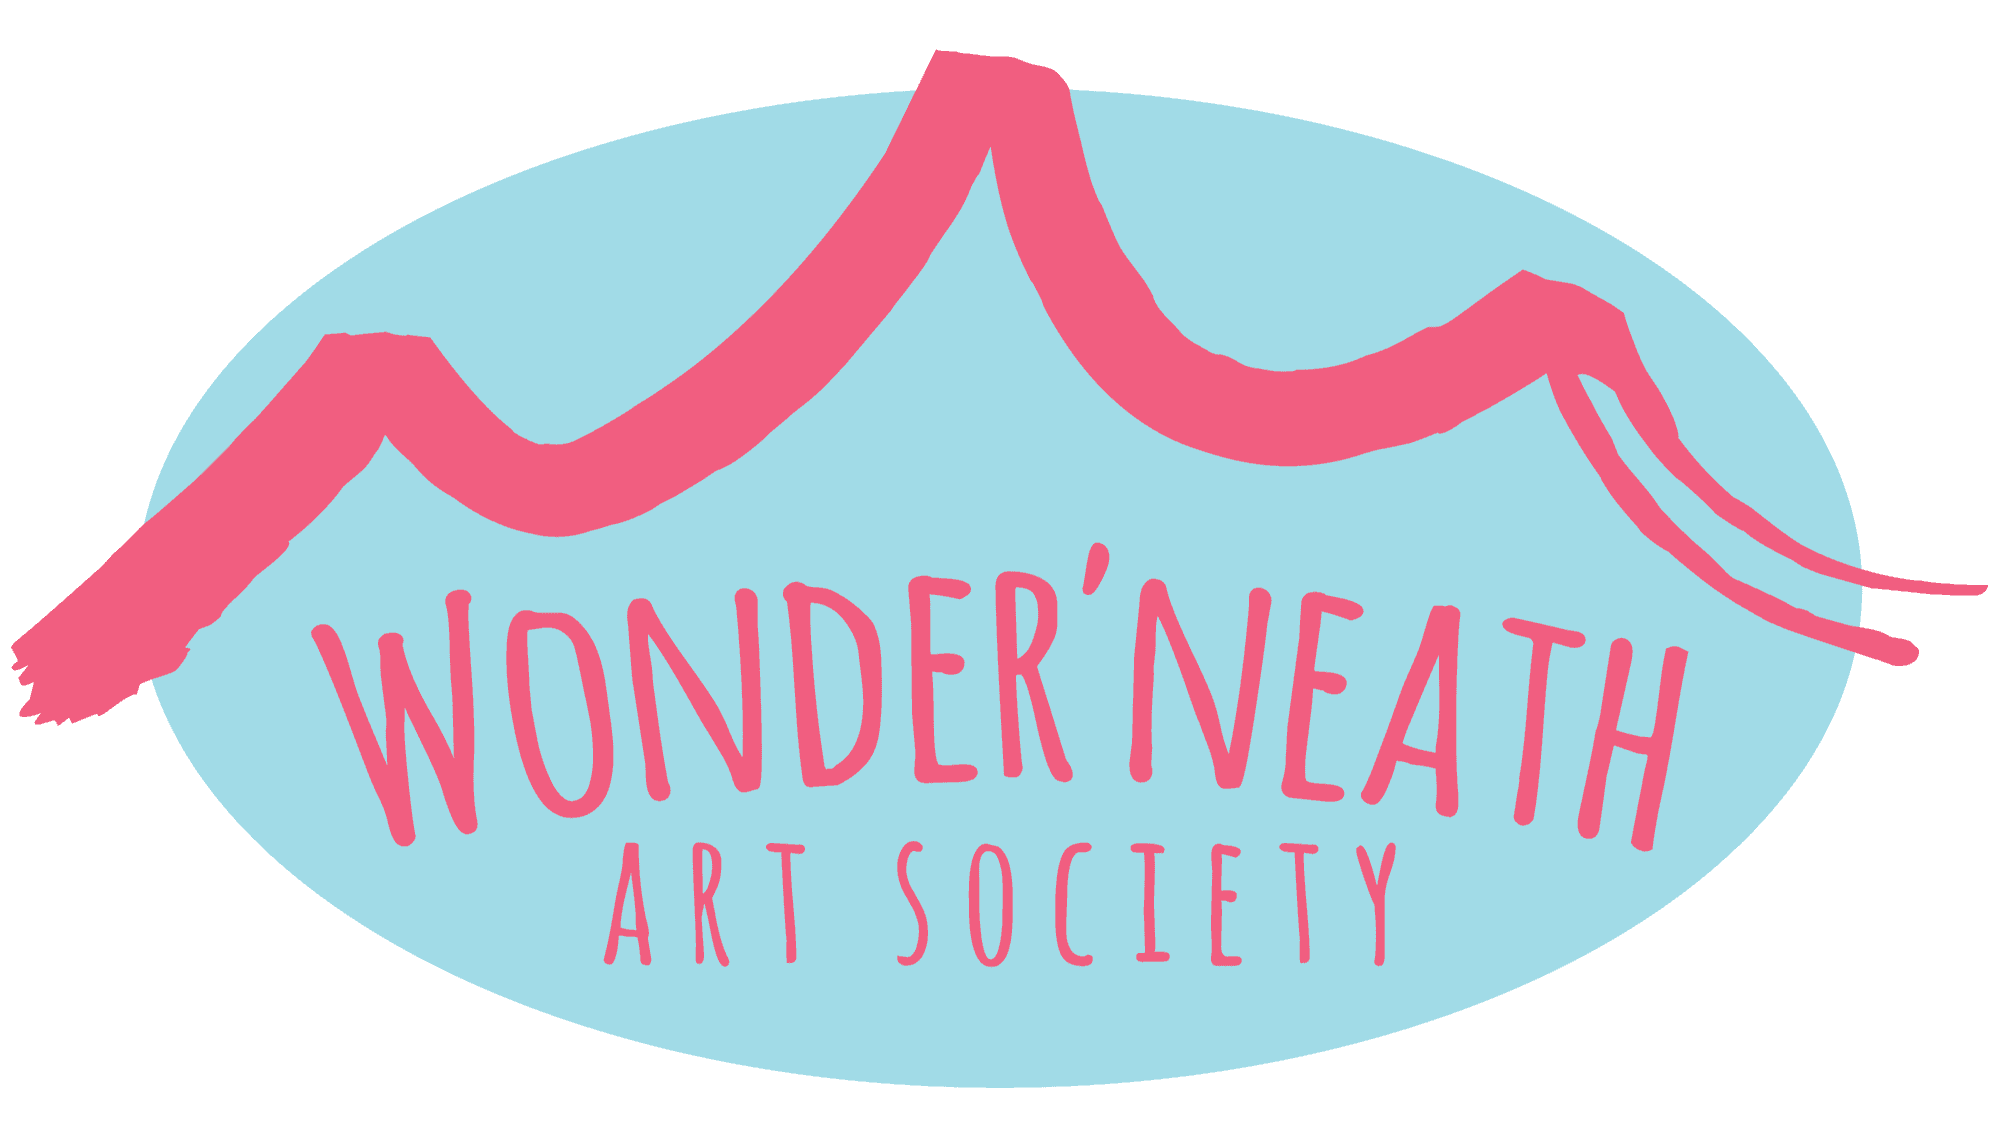 Wonder'neath Art Society logo